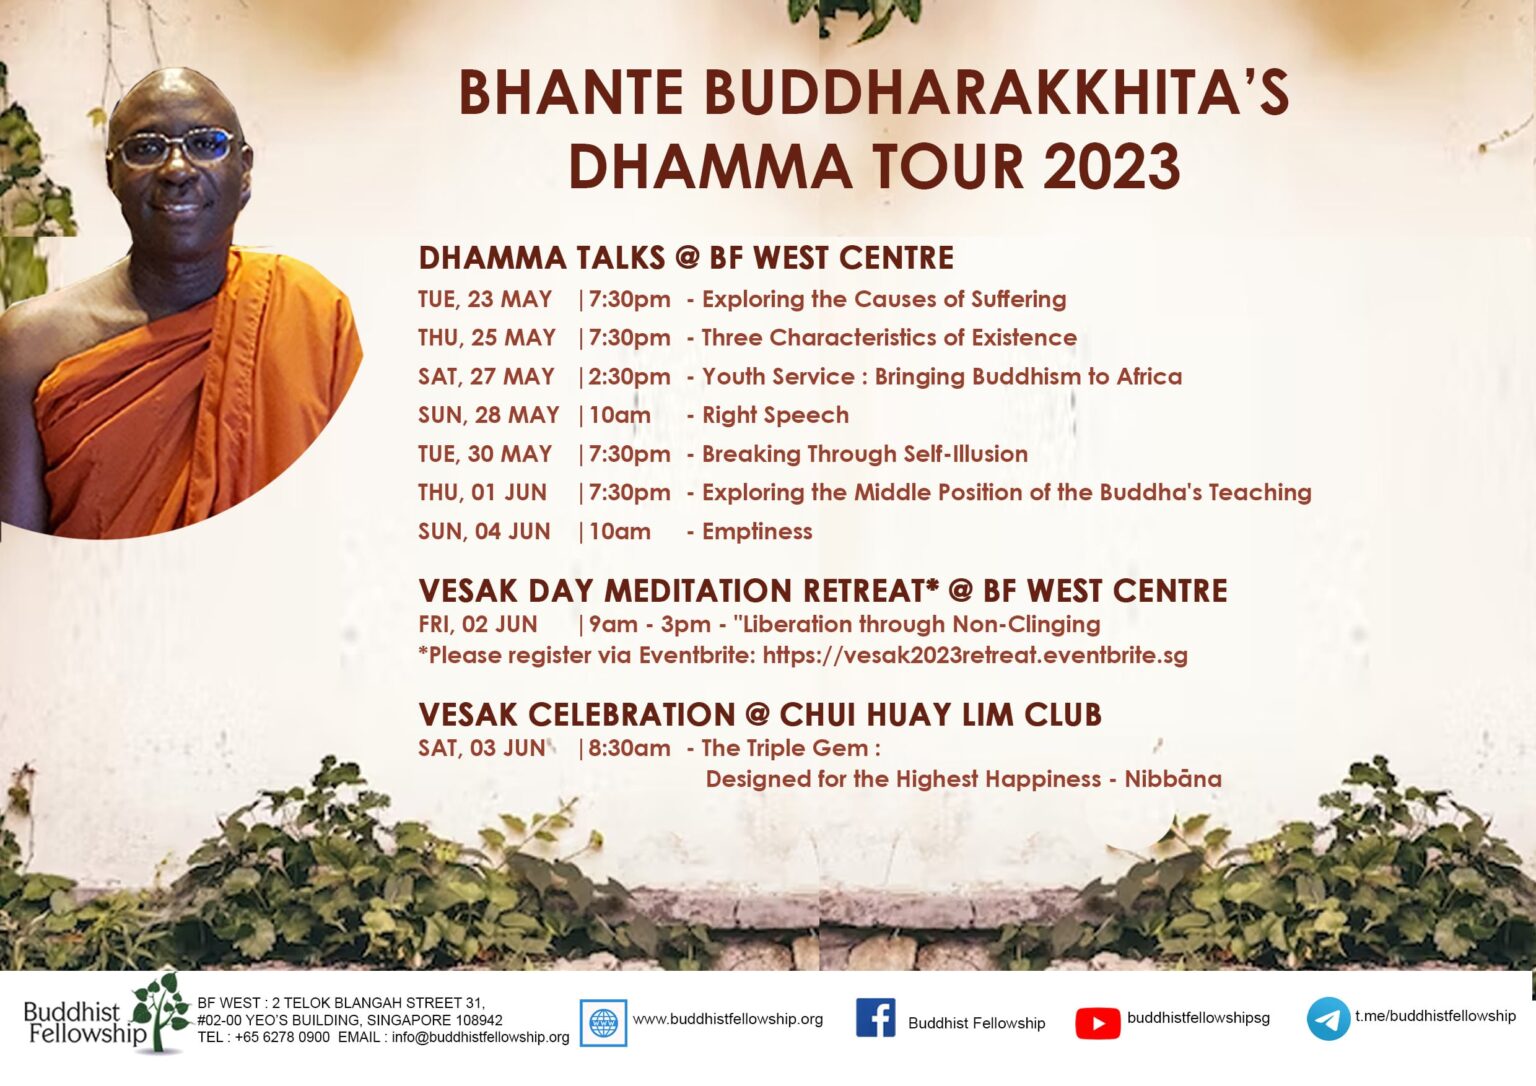 Bhante Buddharakkhita’s Dhamma Tour in Singapore and Taiwan